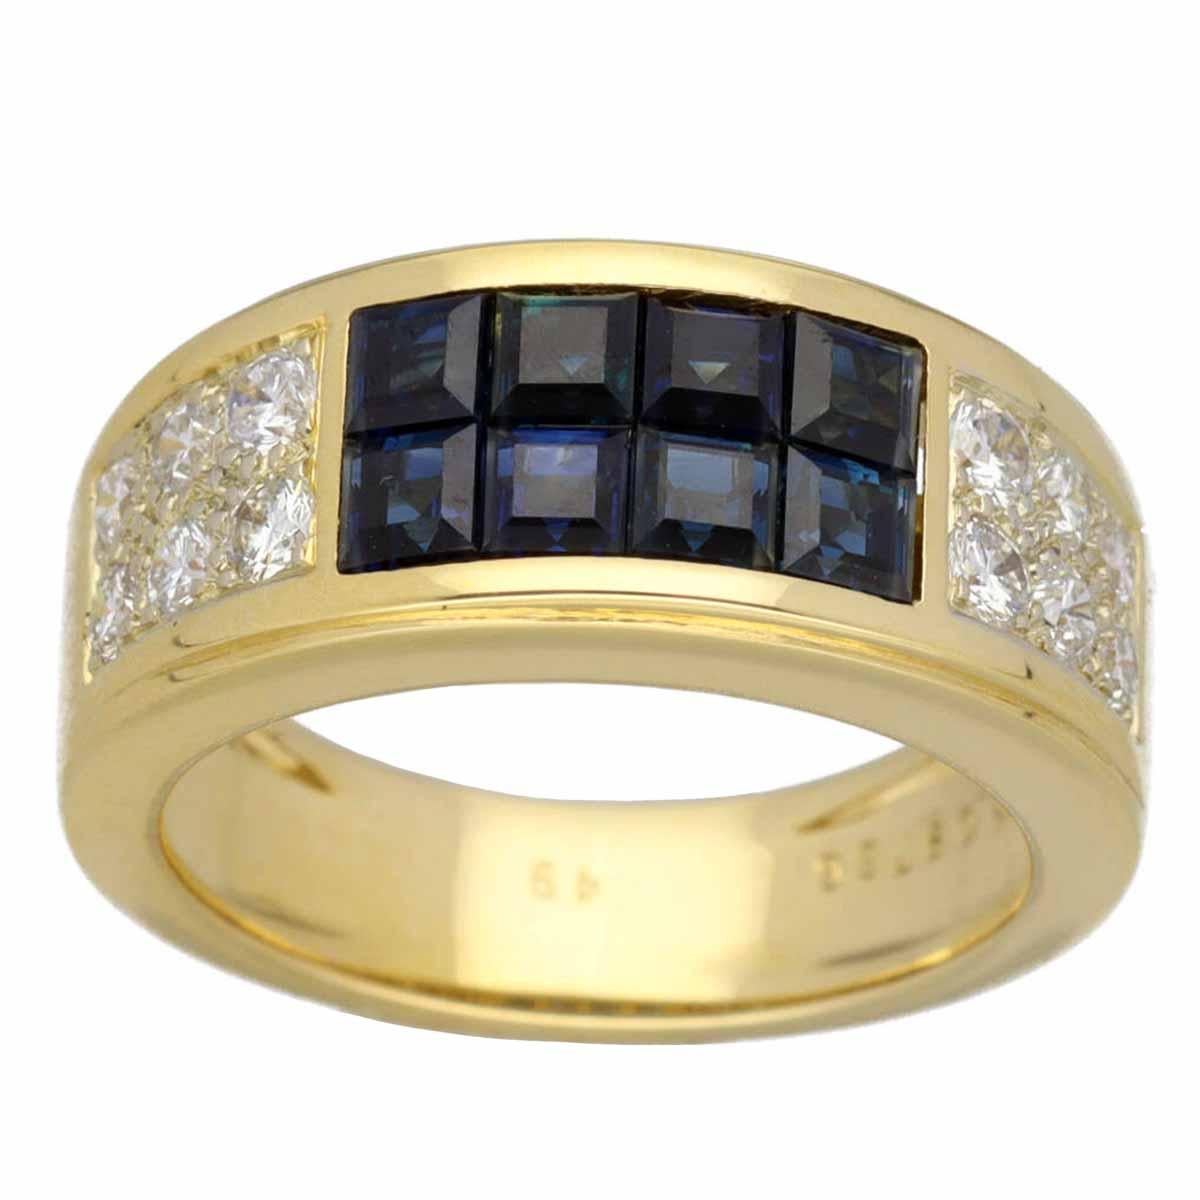 Marke:Cartier 
Name:Diabolo Invisible Set Blauer Saphir Diamant Ring
MATERIAL :12P Diamant, 8P Blauer Saphir, 750 K18 YG Gelbgold
Wird geliefert mit:Cartier Box, Etui, Cartier Reparaturzertifikat (Mai 2019)
Ringgröße:Britisch & Australisch:J 1/2  / 